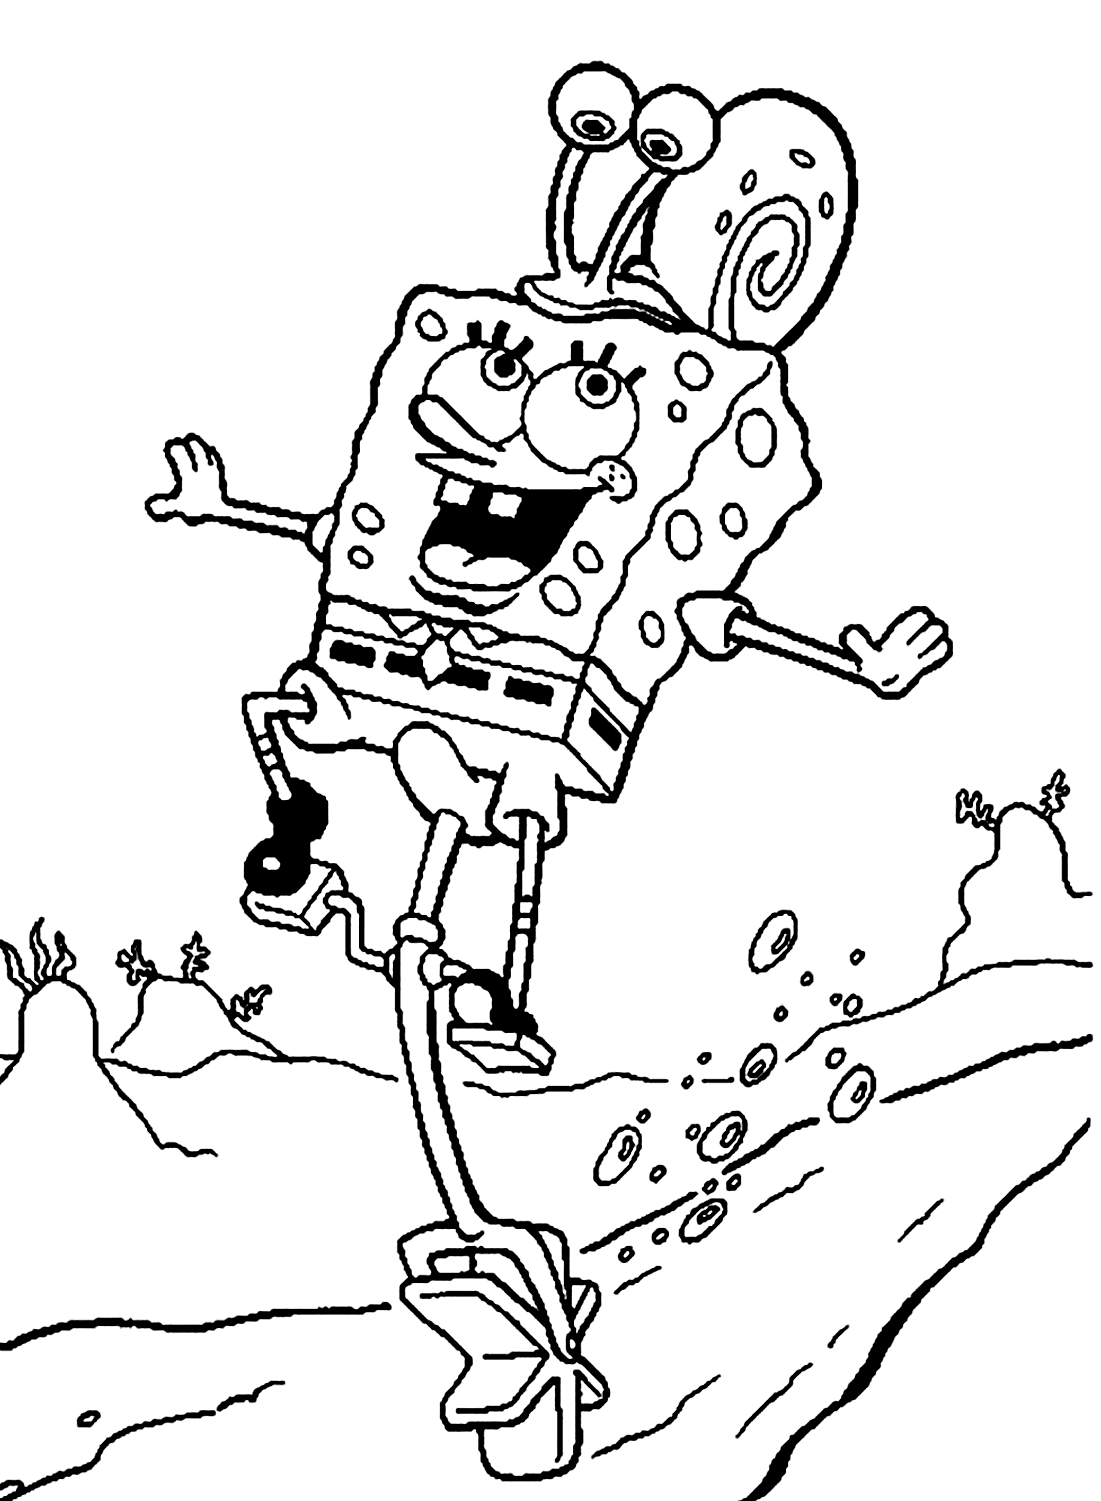 Spongebob Plays with Snail Color Sheet from Spongebob